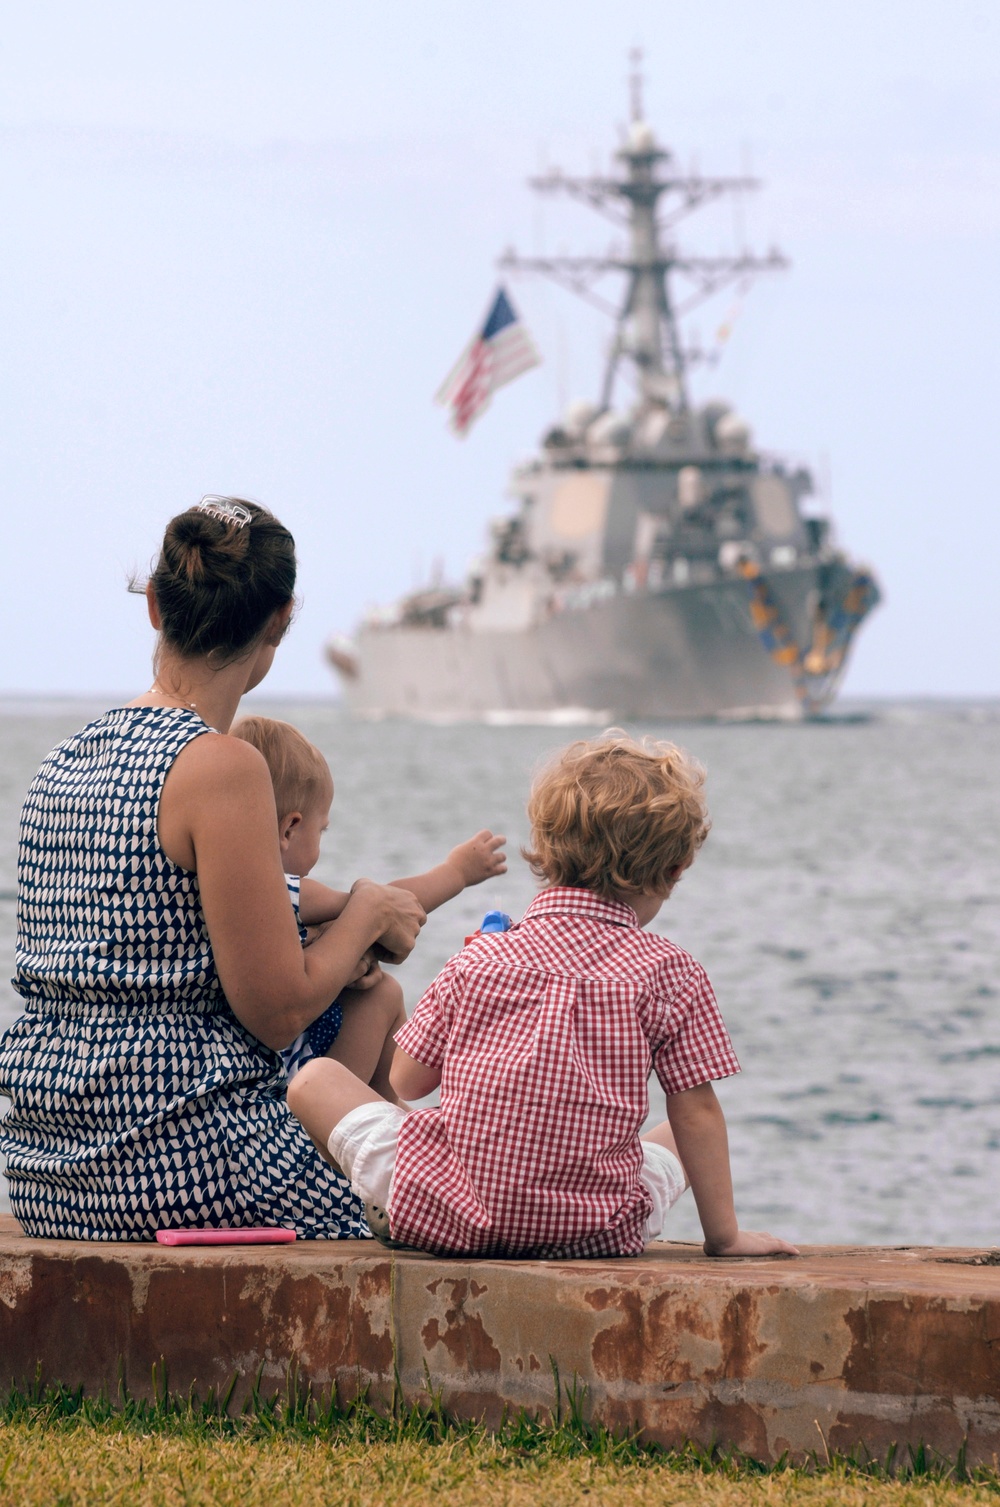 USS Hopper returns to its homeport